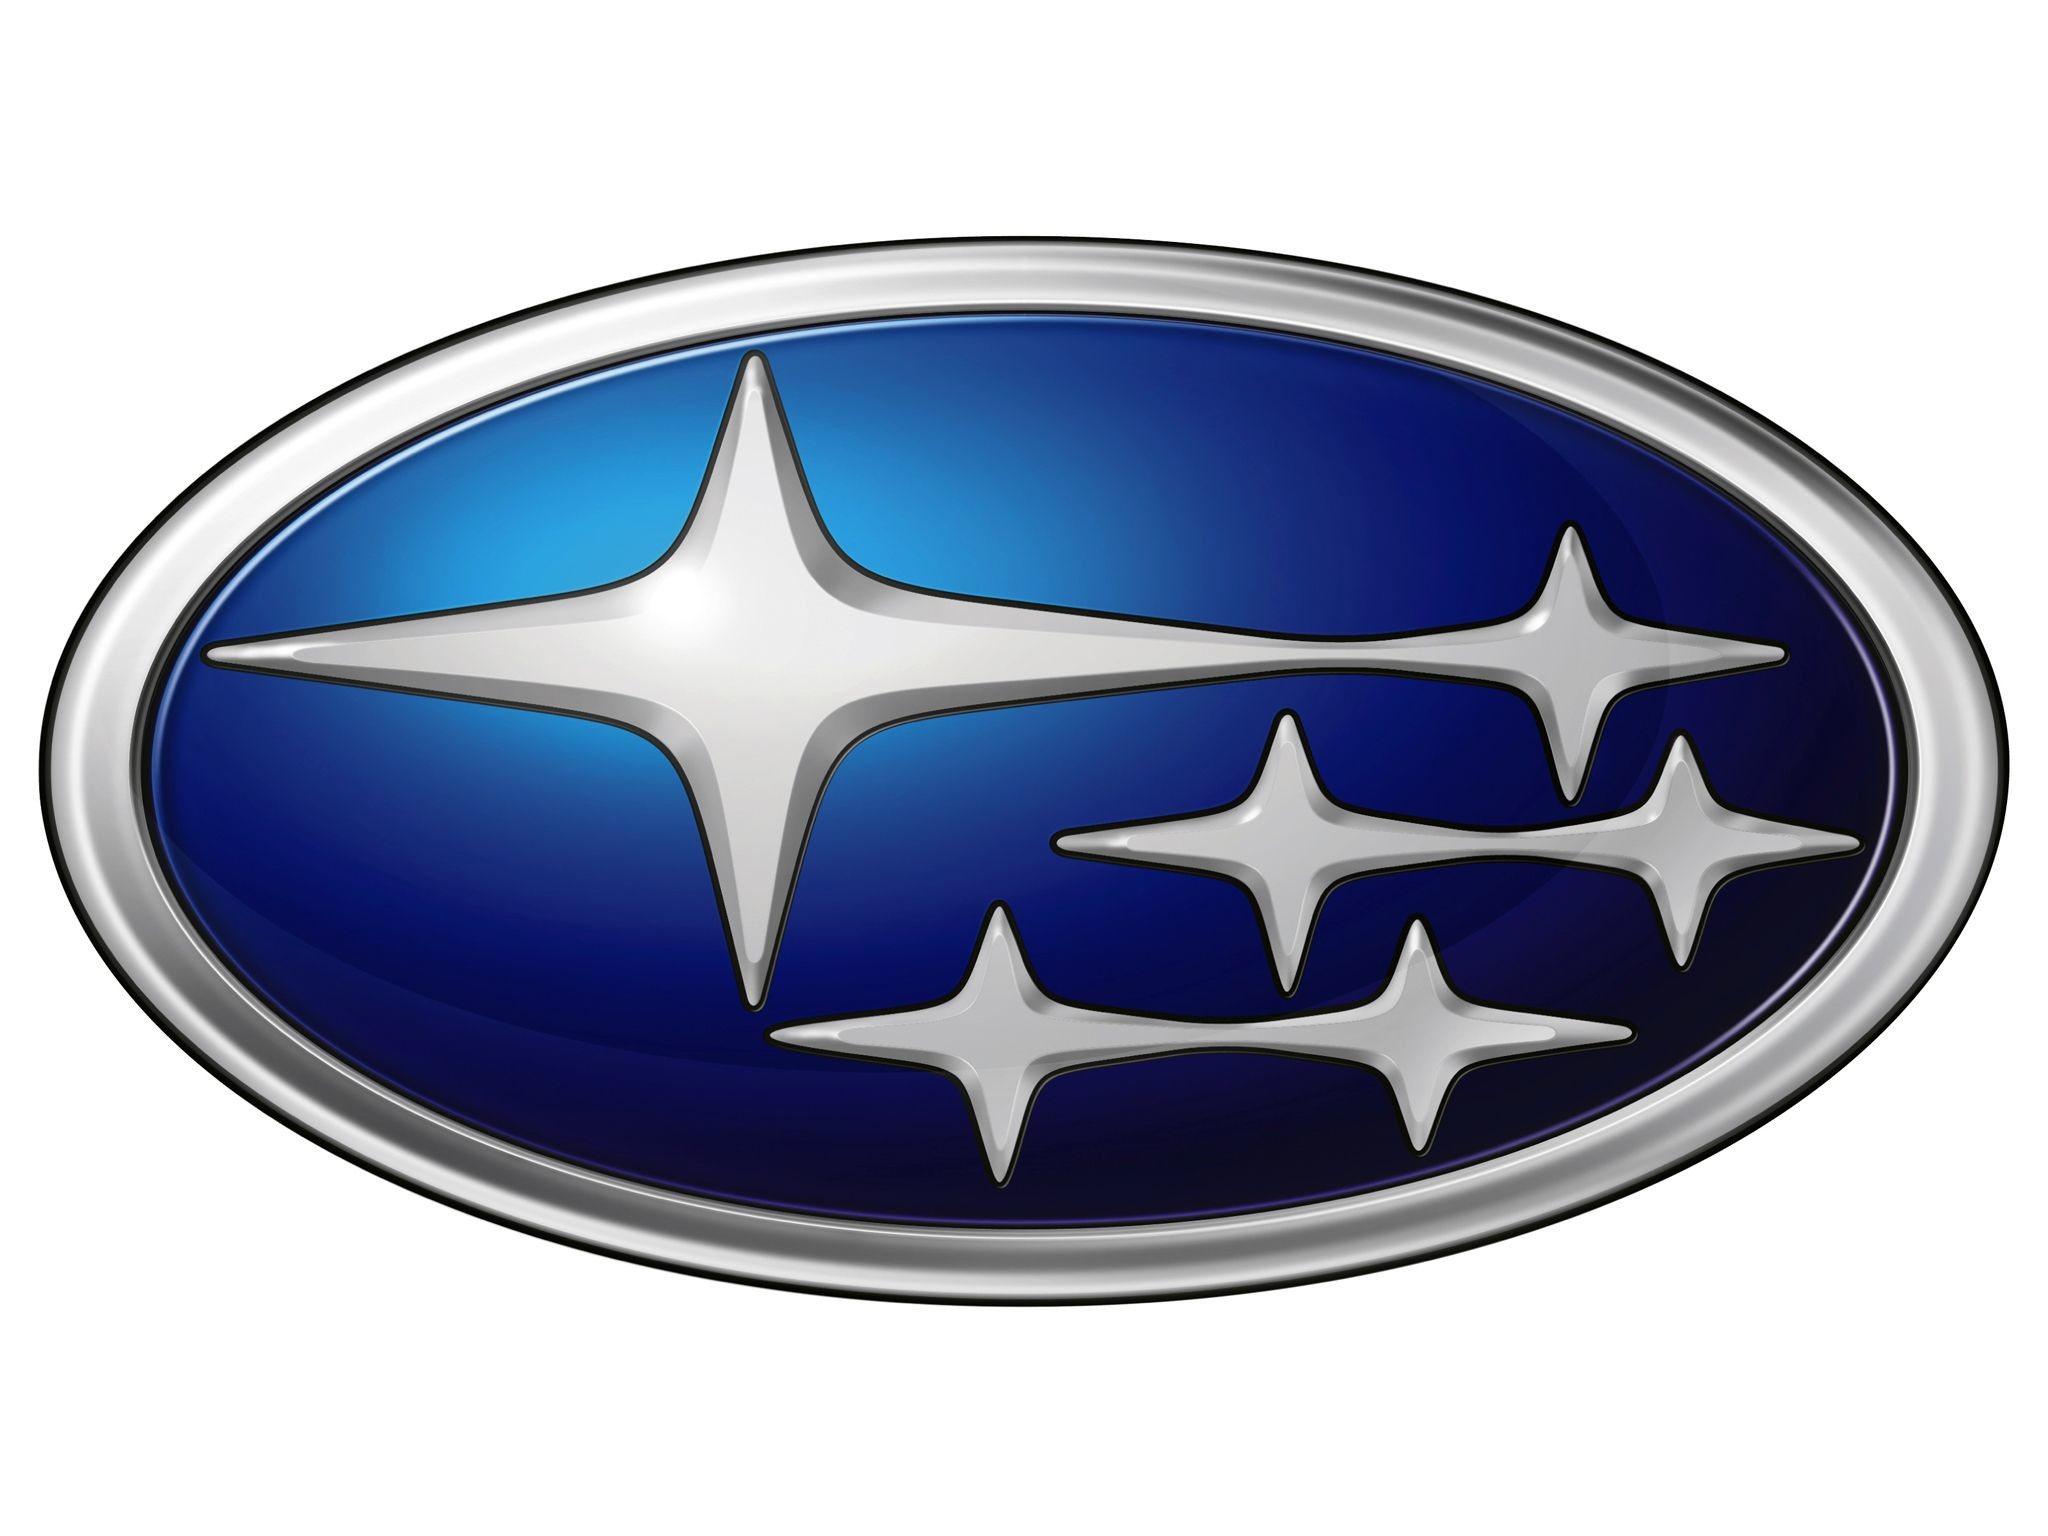 2048x1536 Subaru Logo Wallpapers Mobile